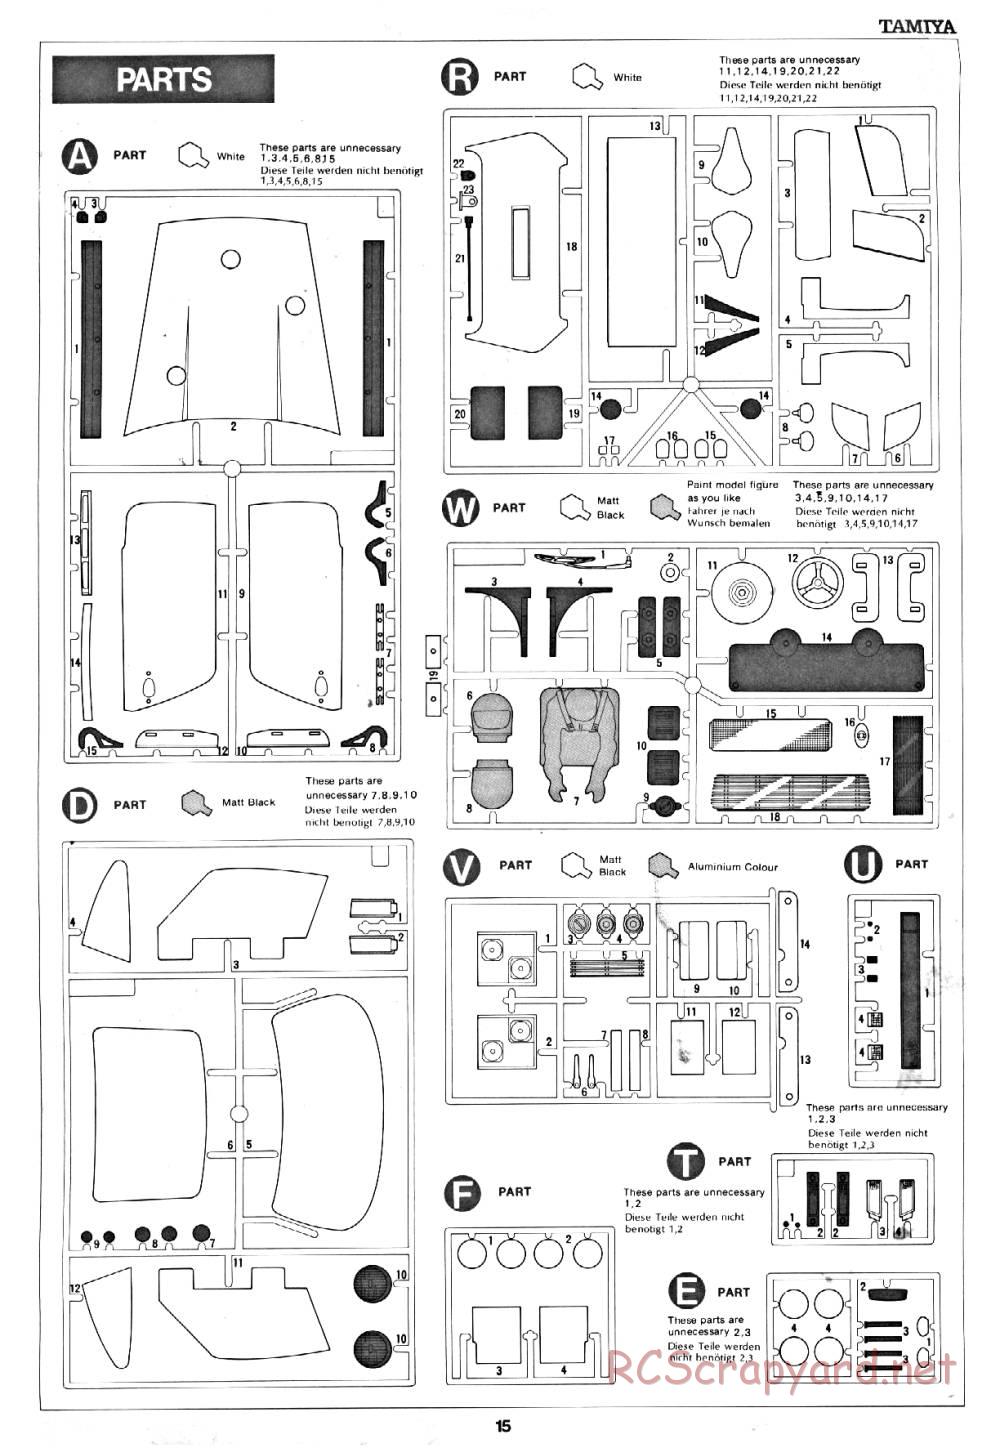 Tamiya - Martini Porsche 935 Turbo - 58002 - Manual - Page 15